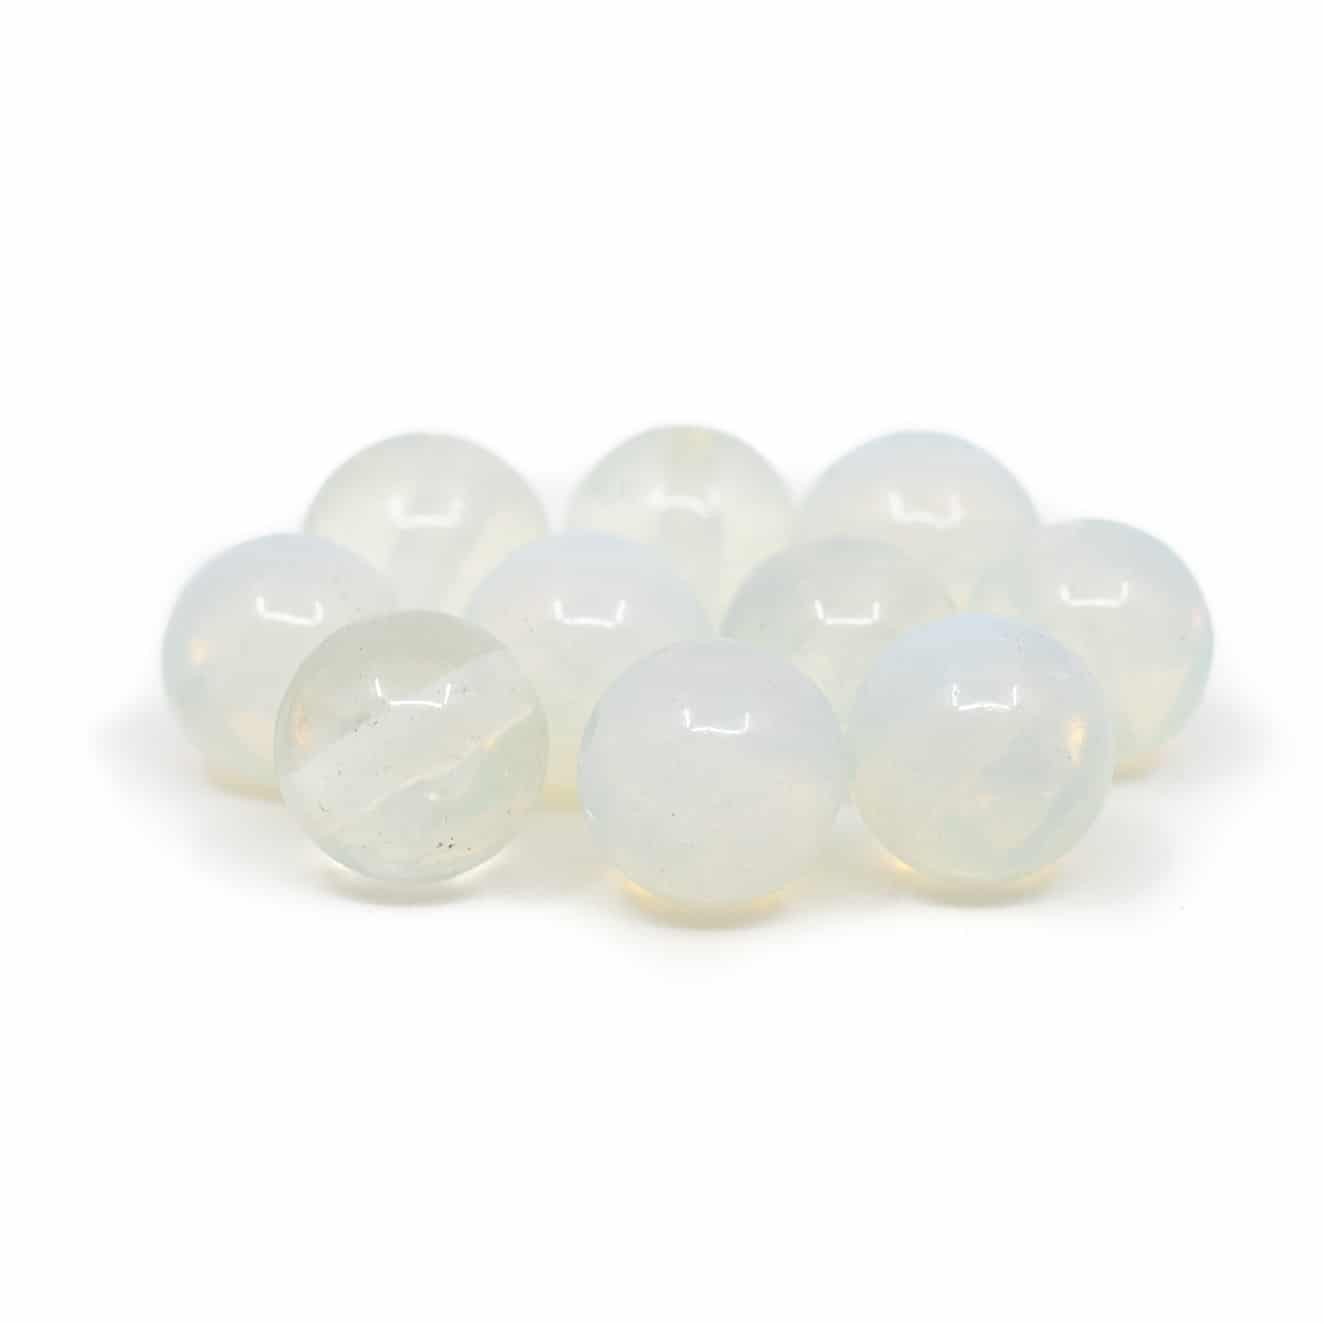 Perles en Pierre Précieuse Opaline en Vrac - 10 pièces (8 mm)